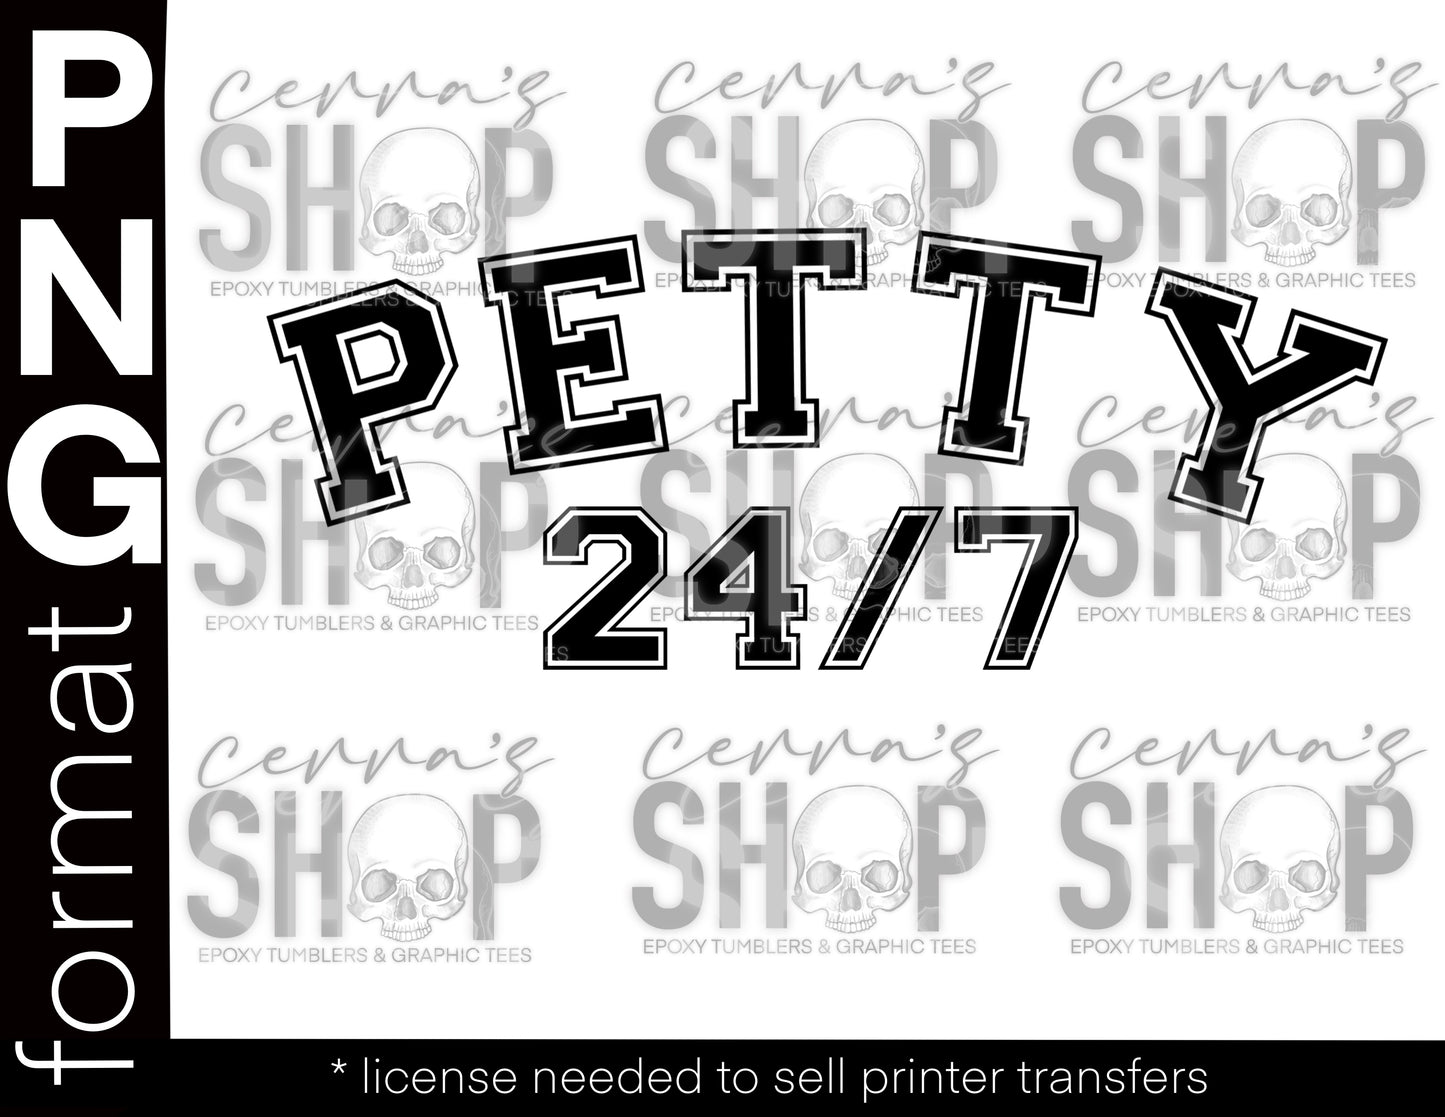 Petty 24/7  Cerra's Shop Creates   